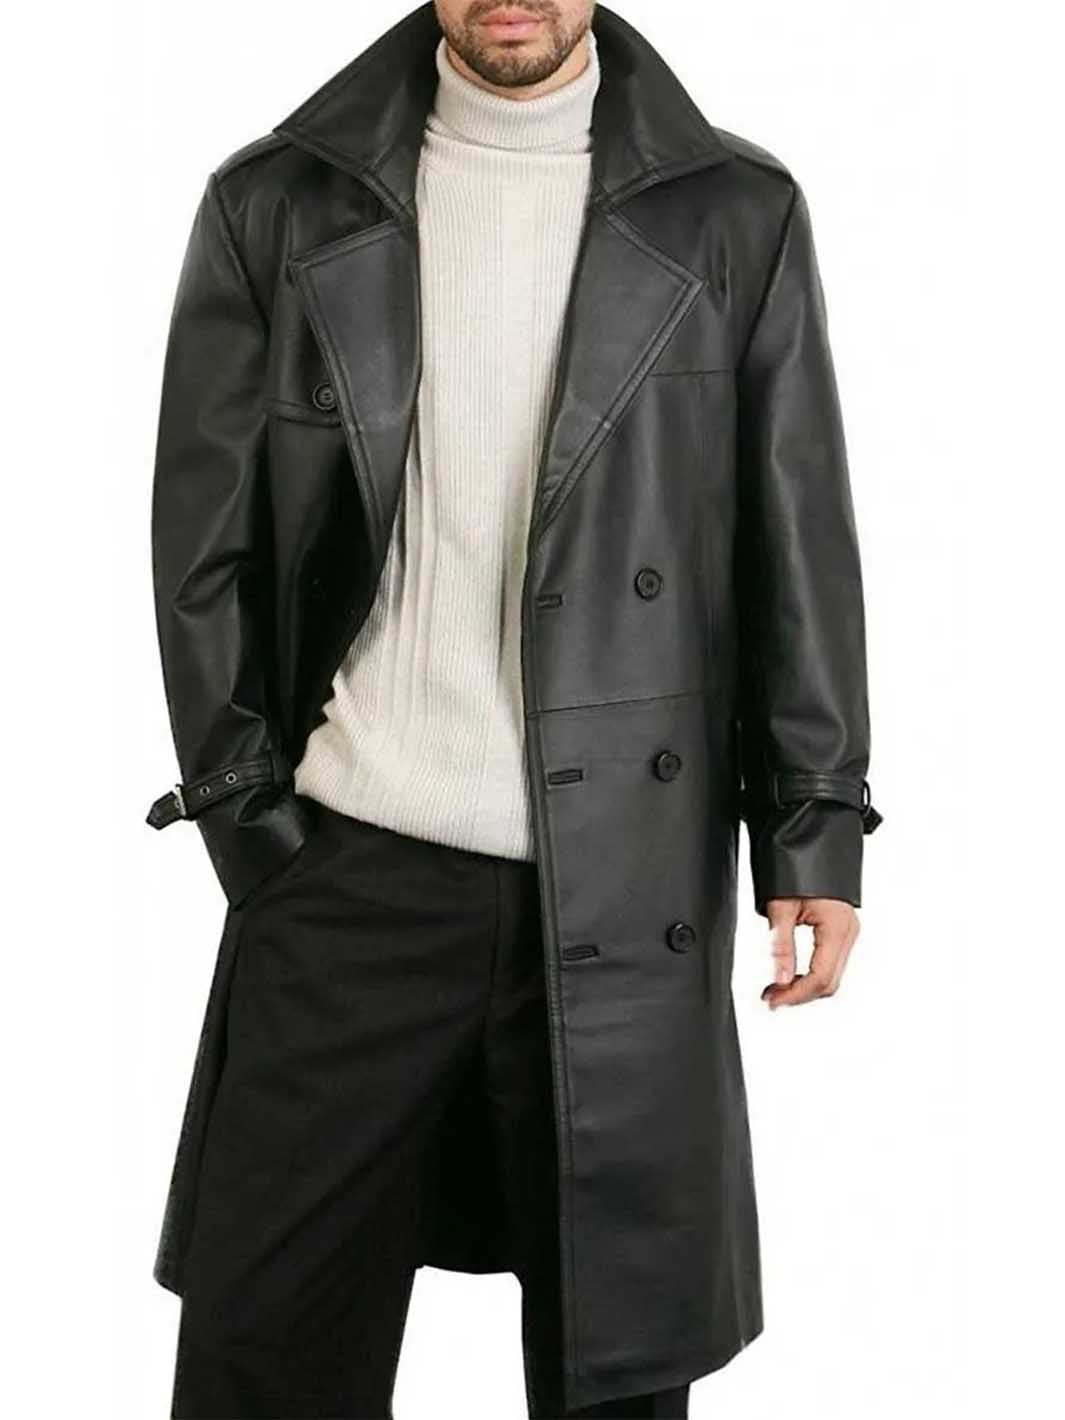 Mens Black Duster Long Leather Coat